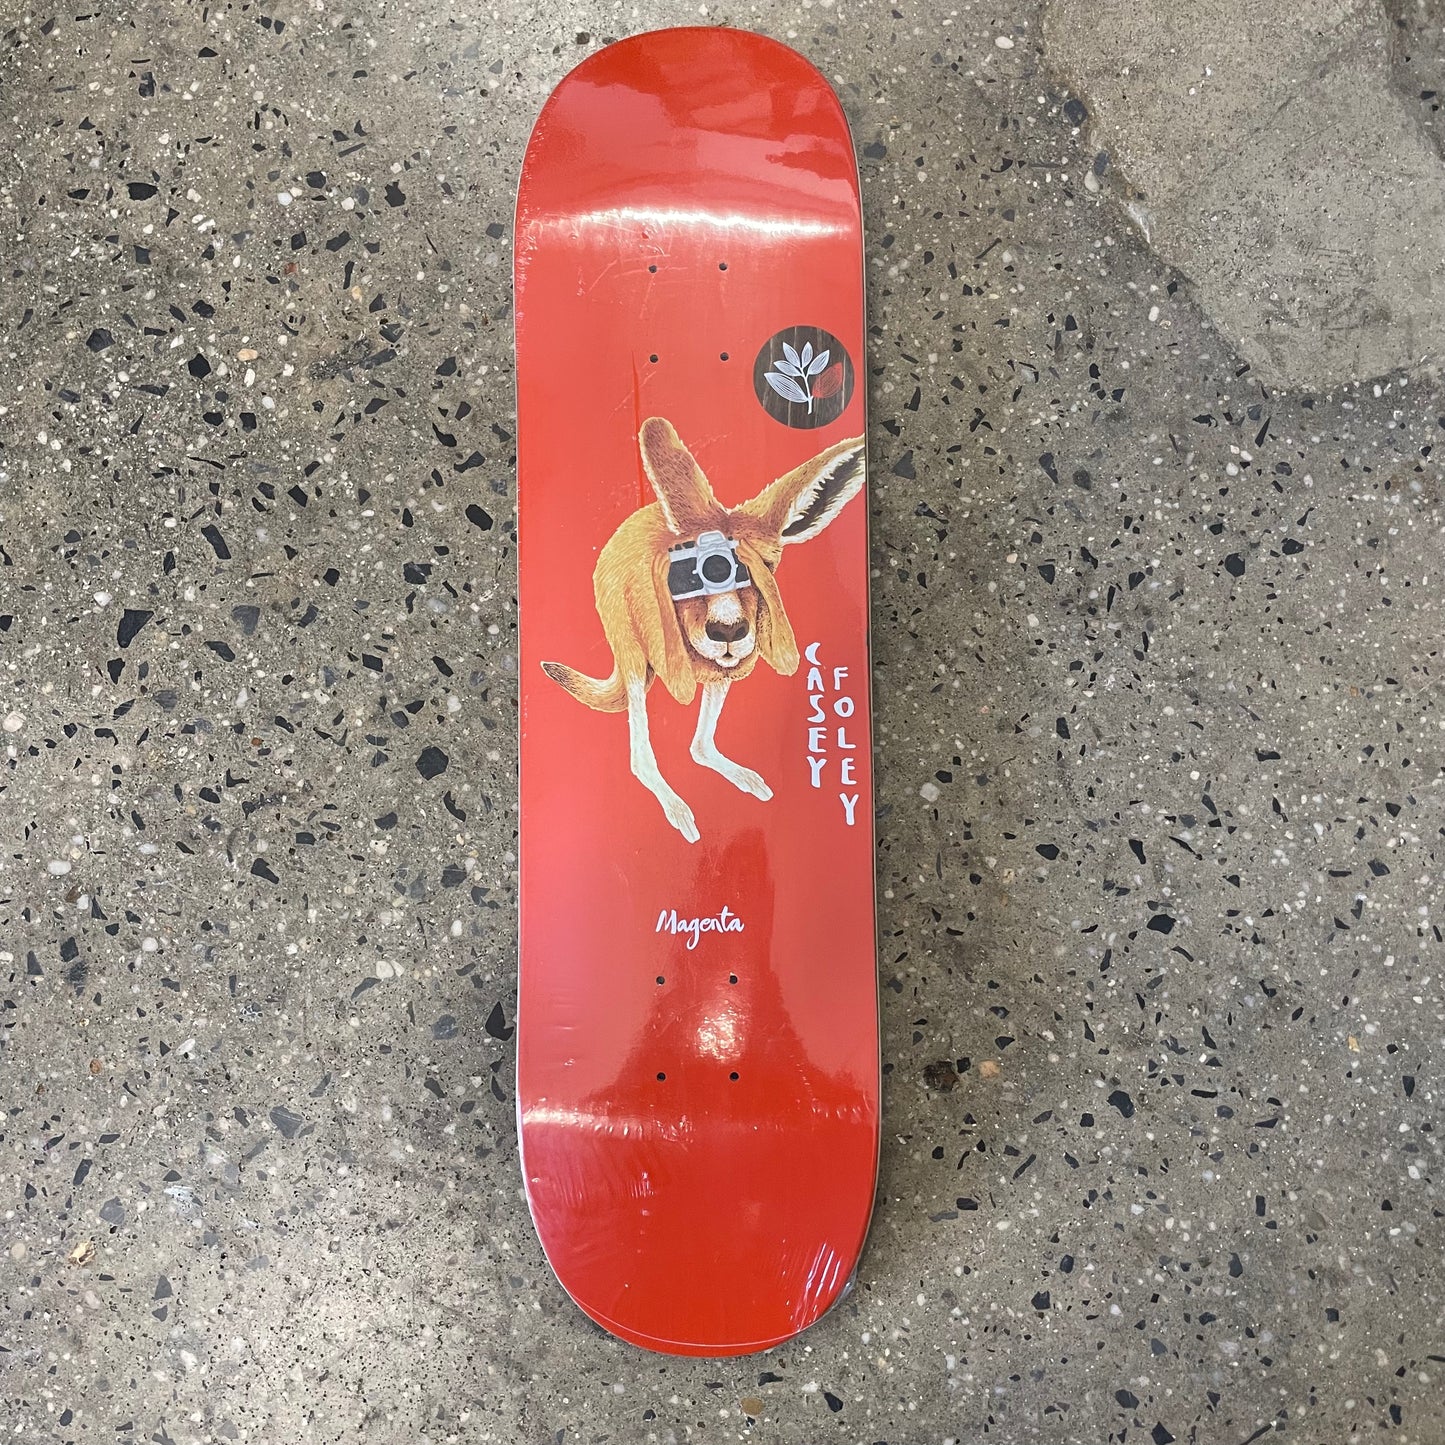 Magenta Casey Foley Kangaroo Skateboard Deck